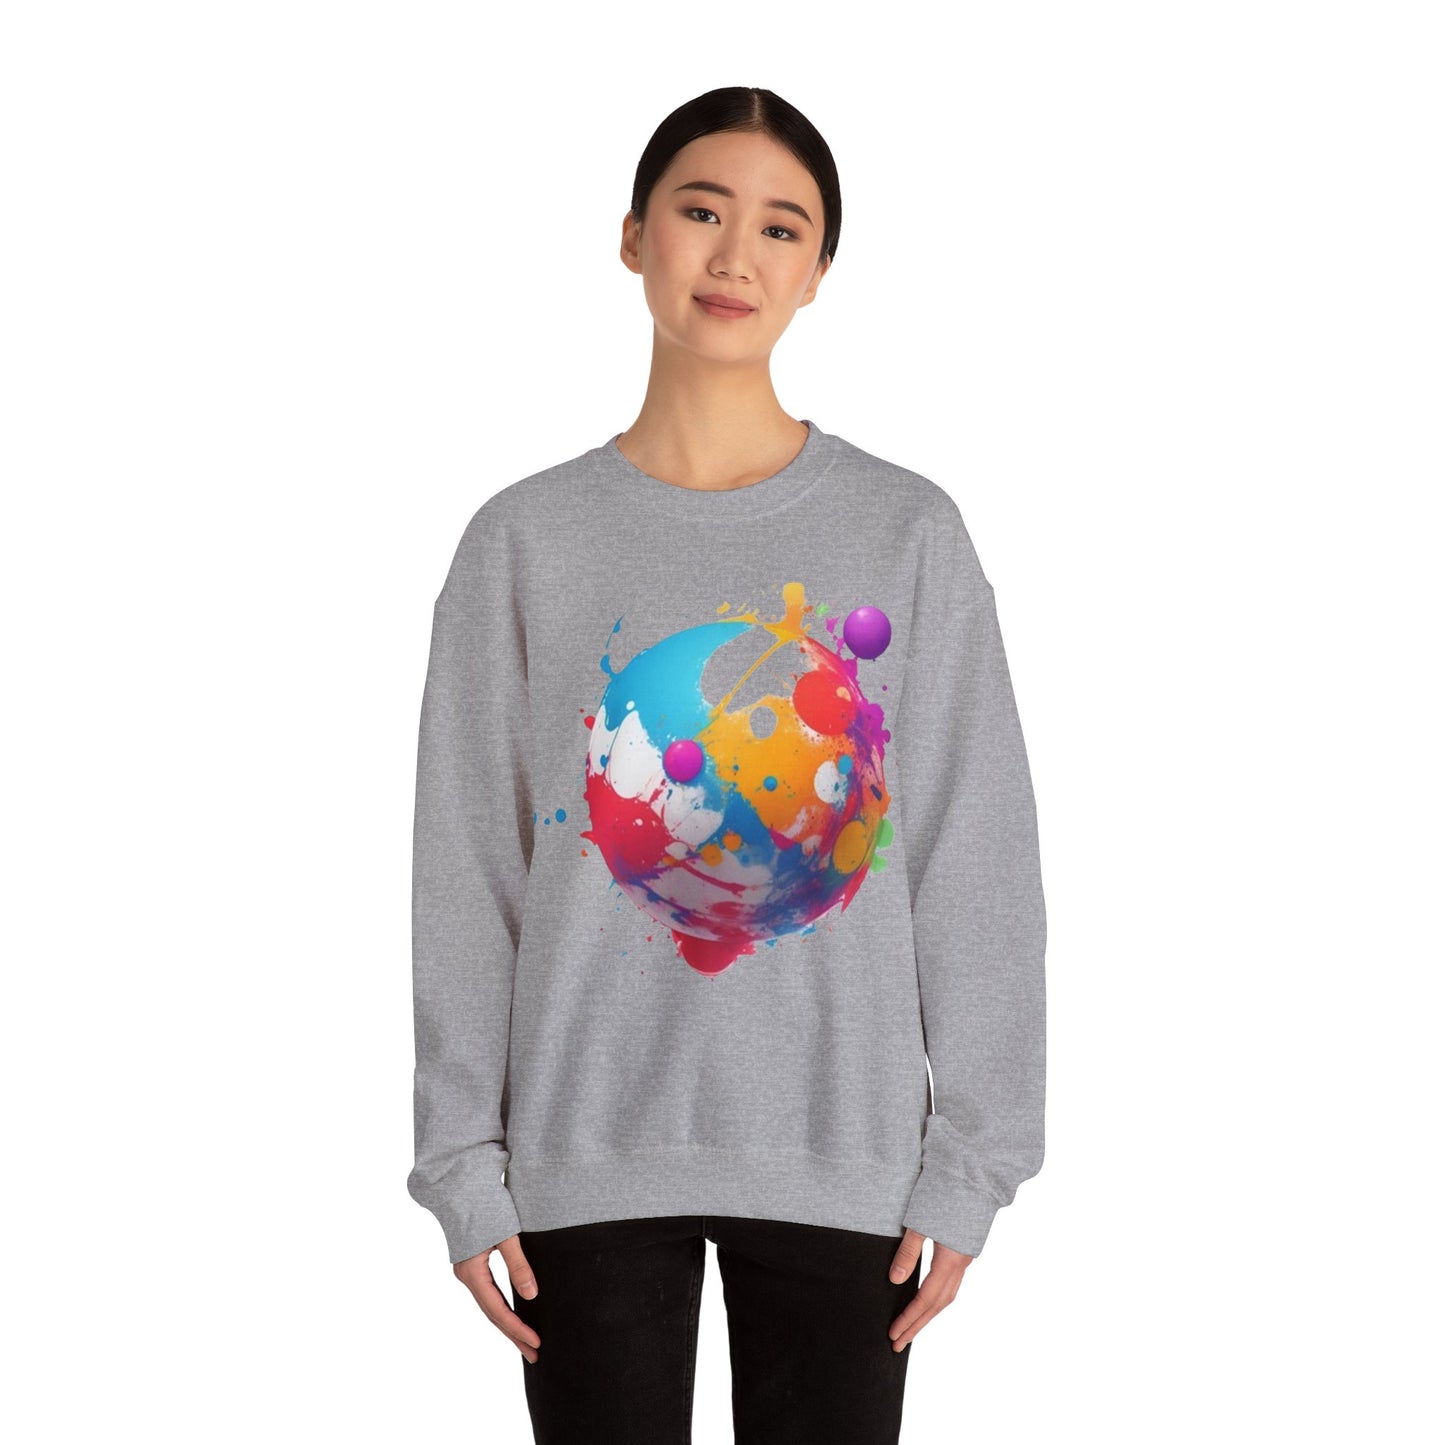 Messy Colourful Sphere Unisex Crewneck Sweatshirt